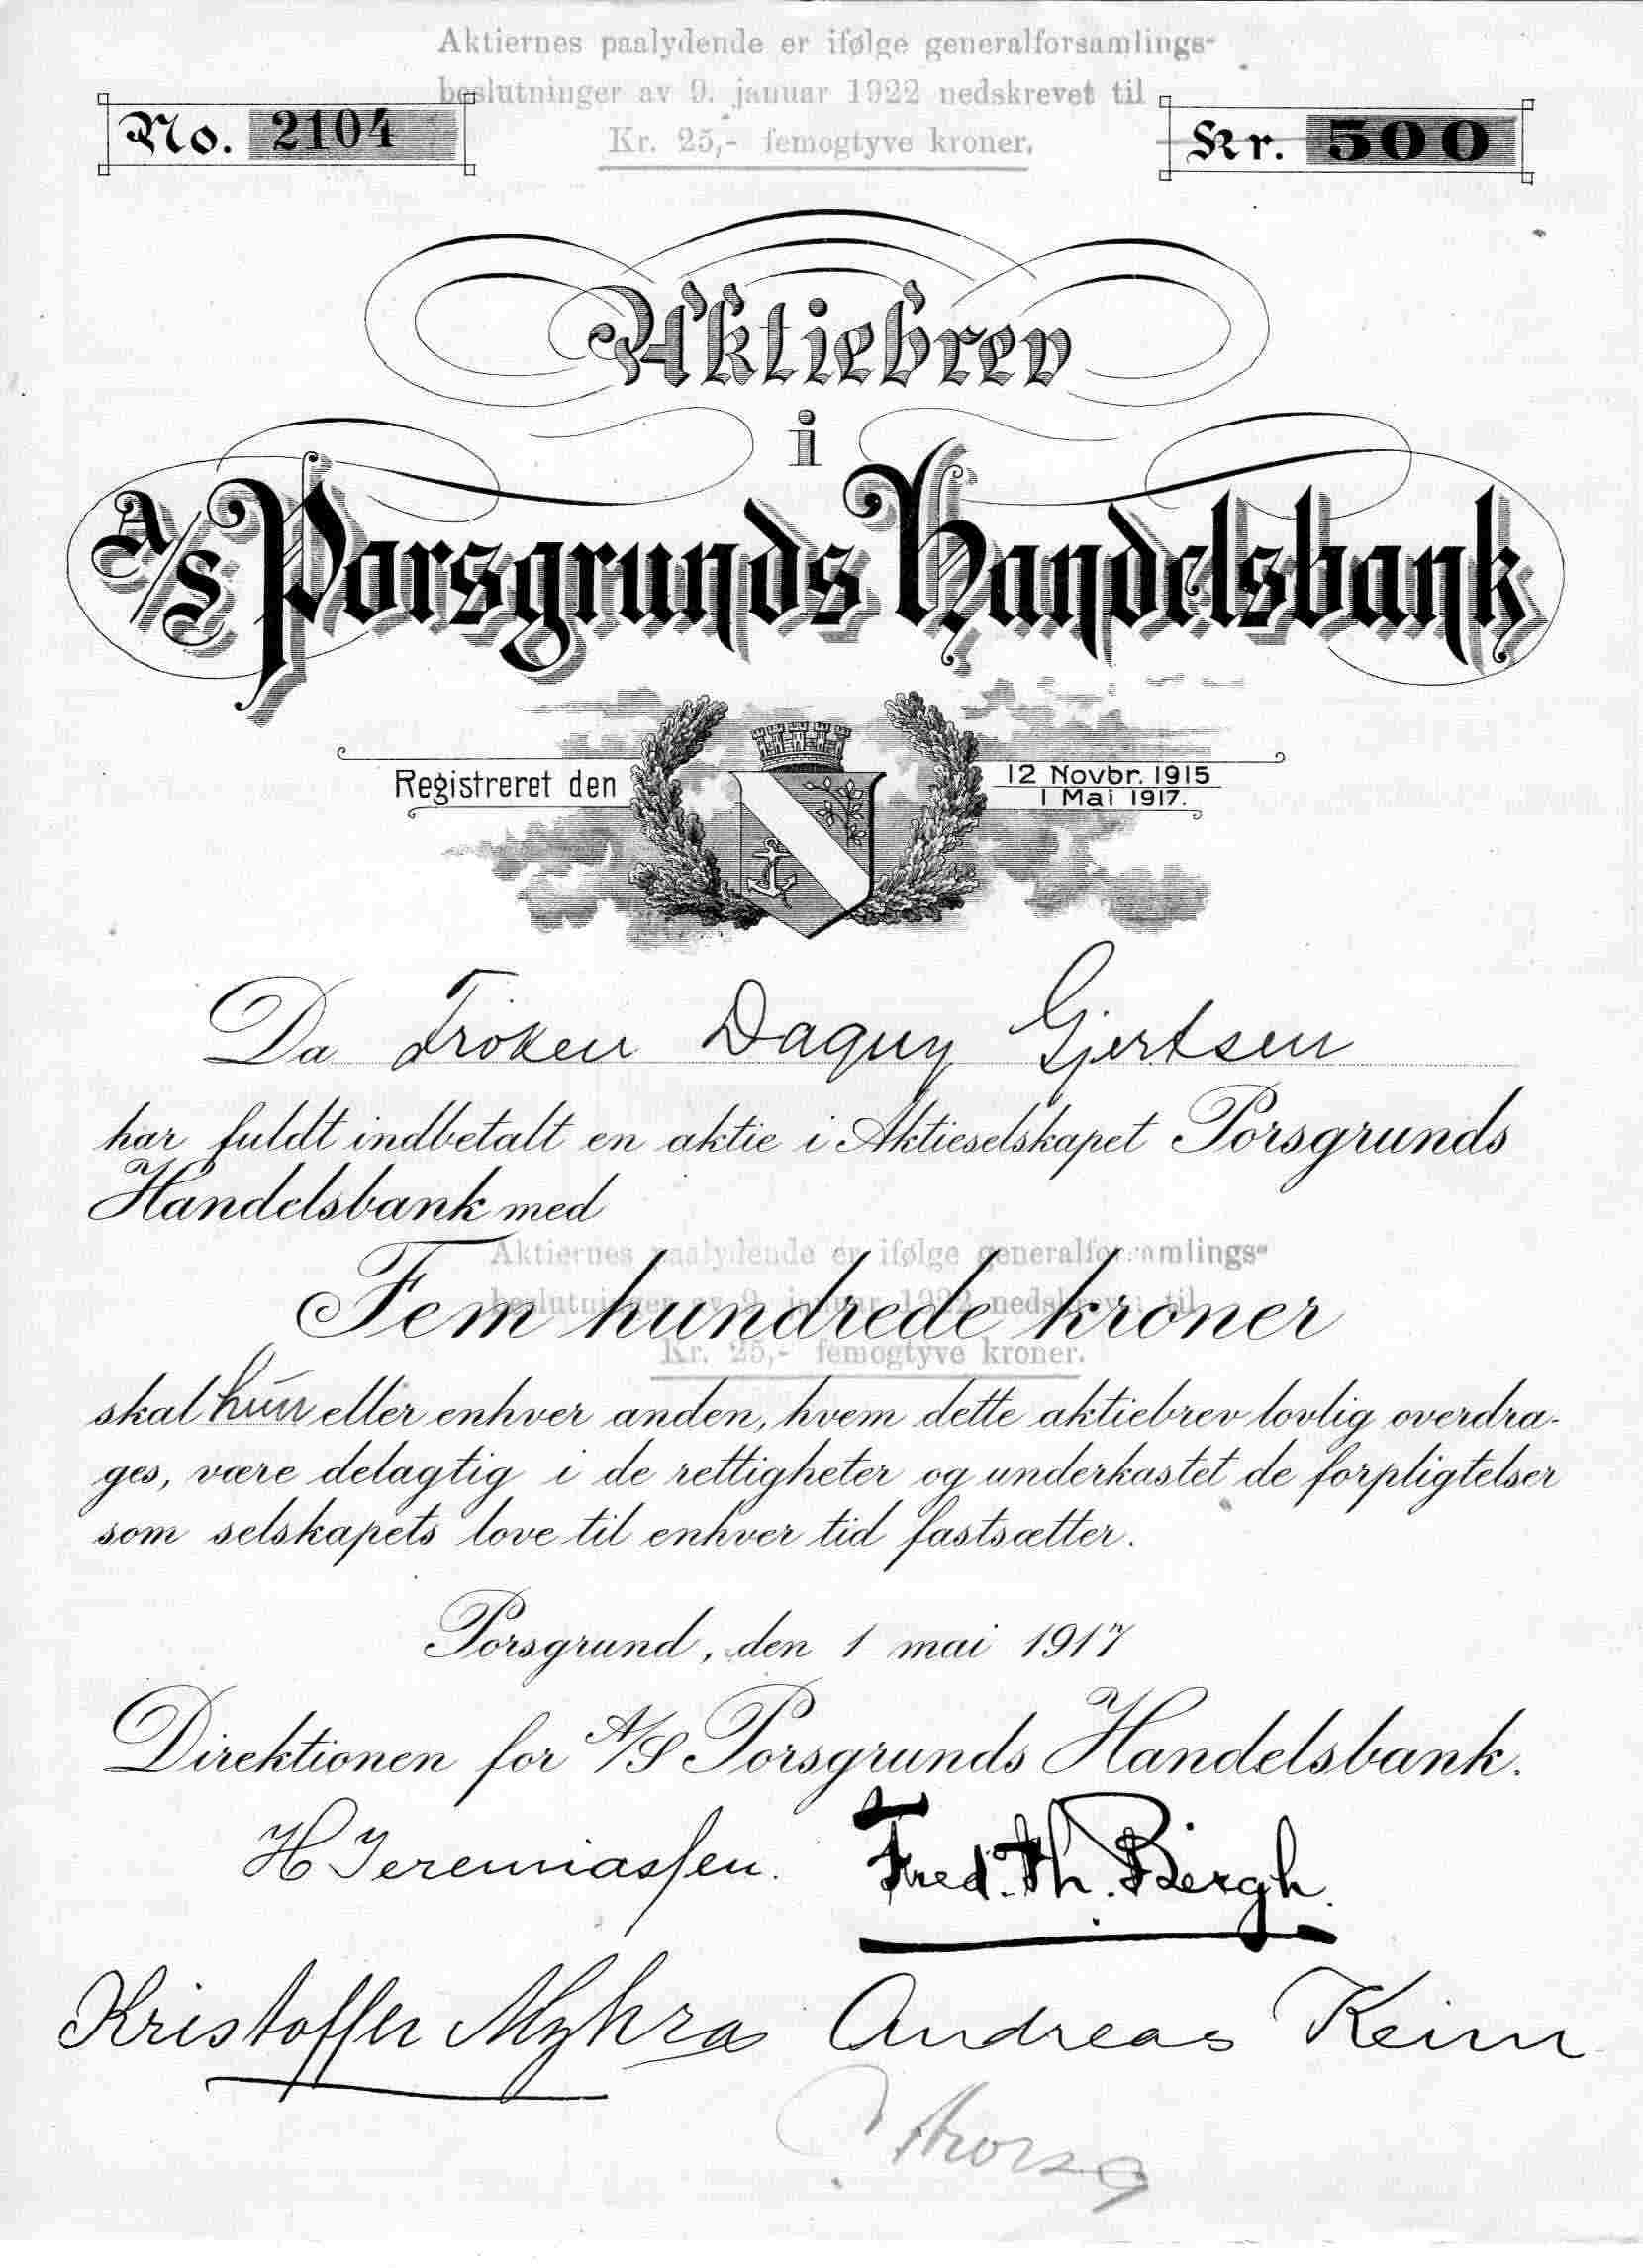 Porsgrunds handelsbank no 2104 kr 500/25 Porsgrund 1916